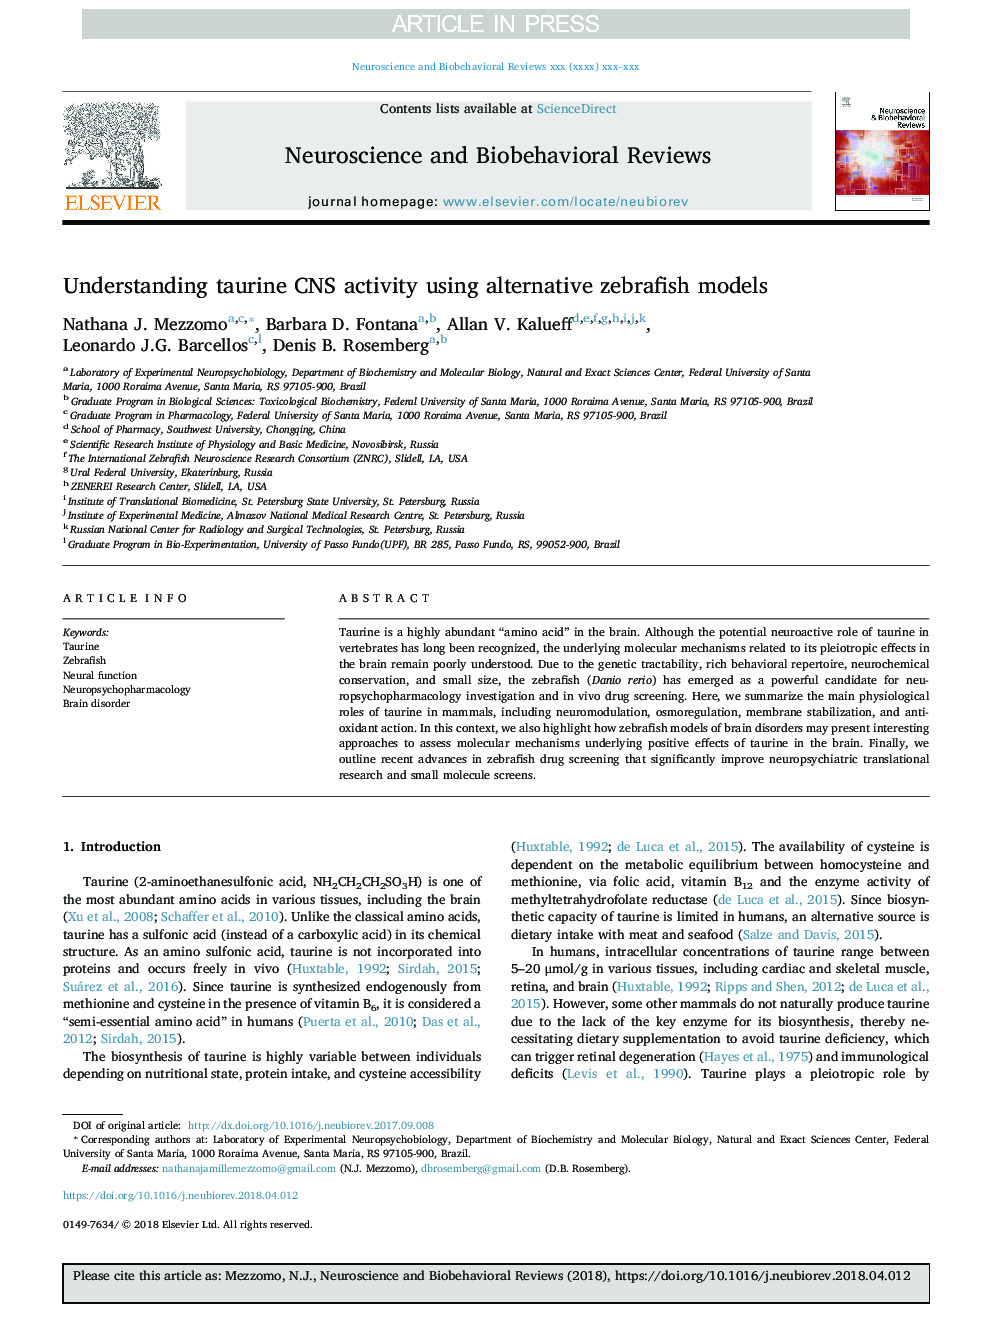 Understanding taurine CNS activity using alternative zebrafish models